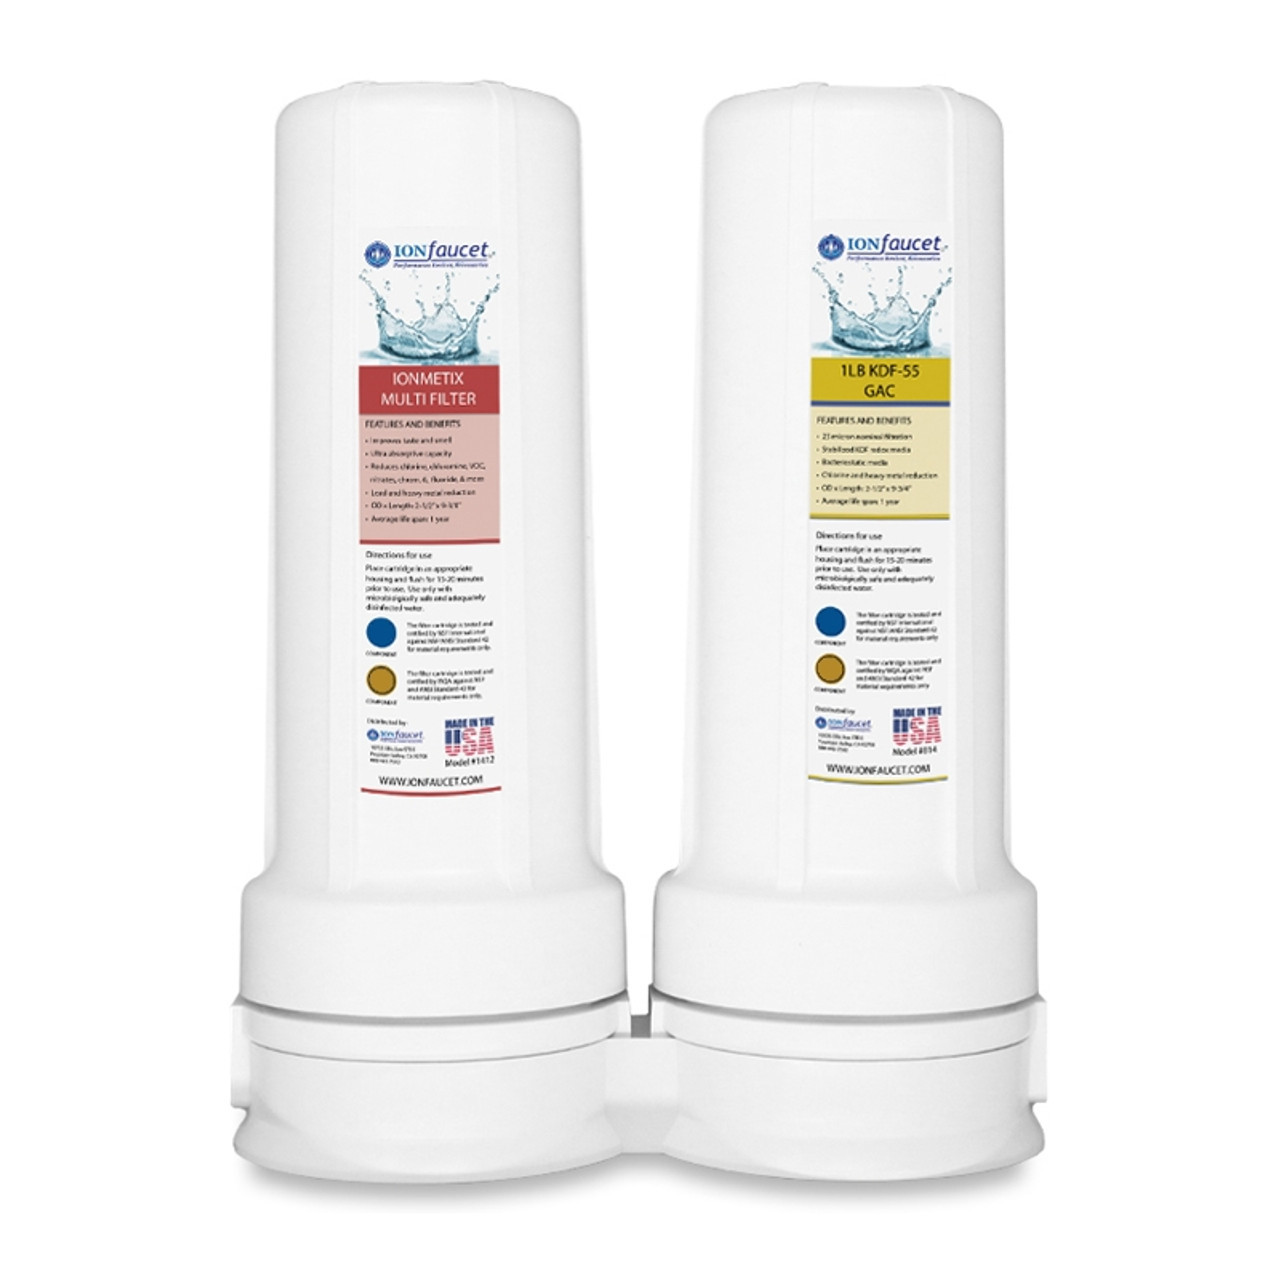 Dww-2 stk filtre eau robinet,universel filtre anti calcaire